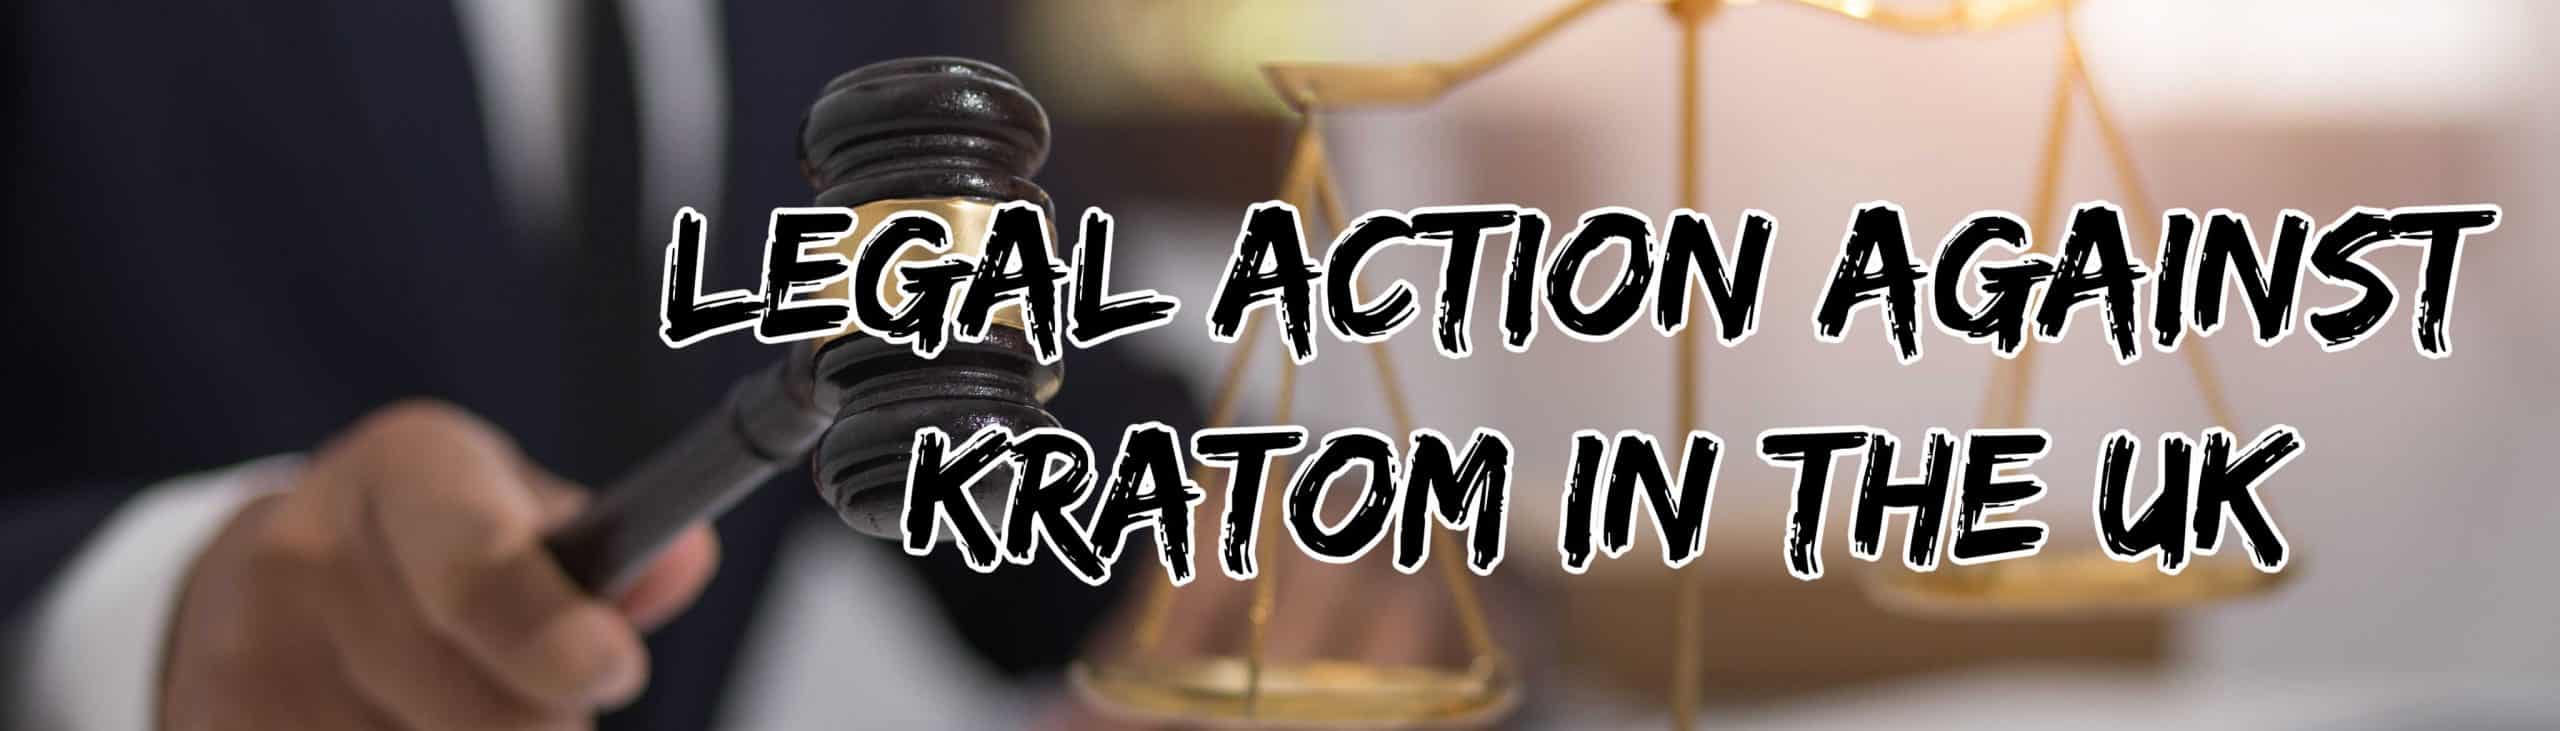 image of legal actions against kratom in uk